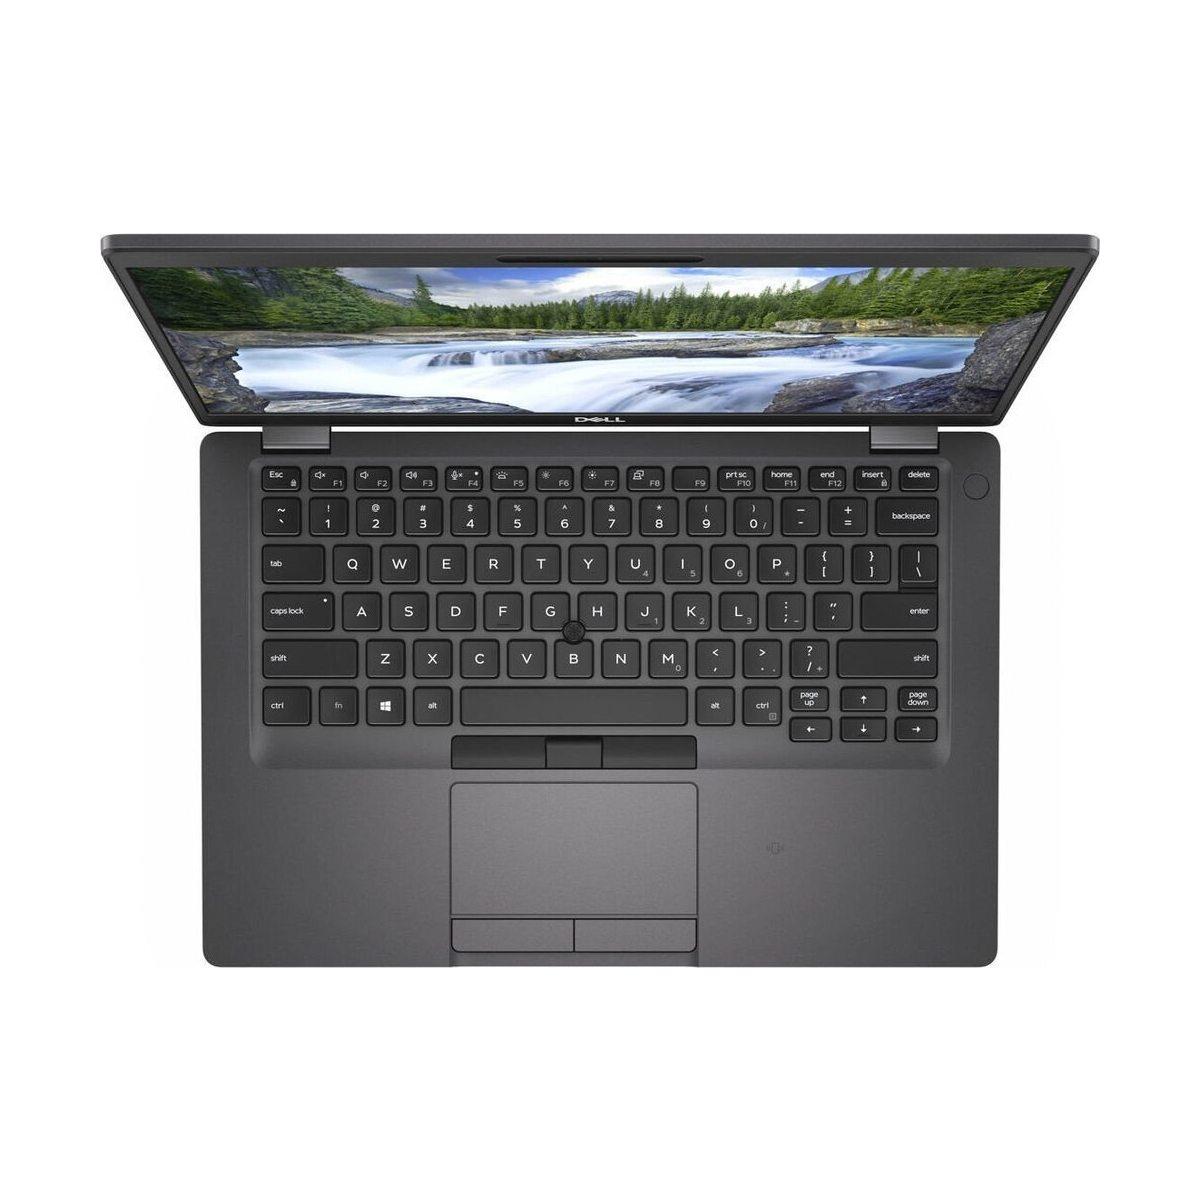 Dell E5400 - Business Laptop